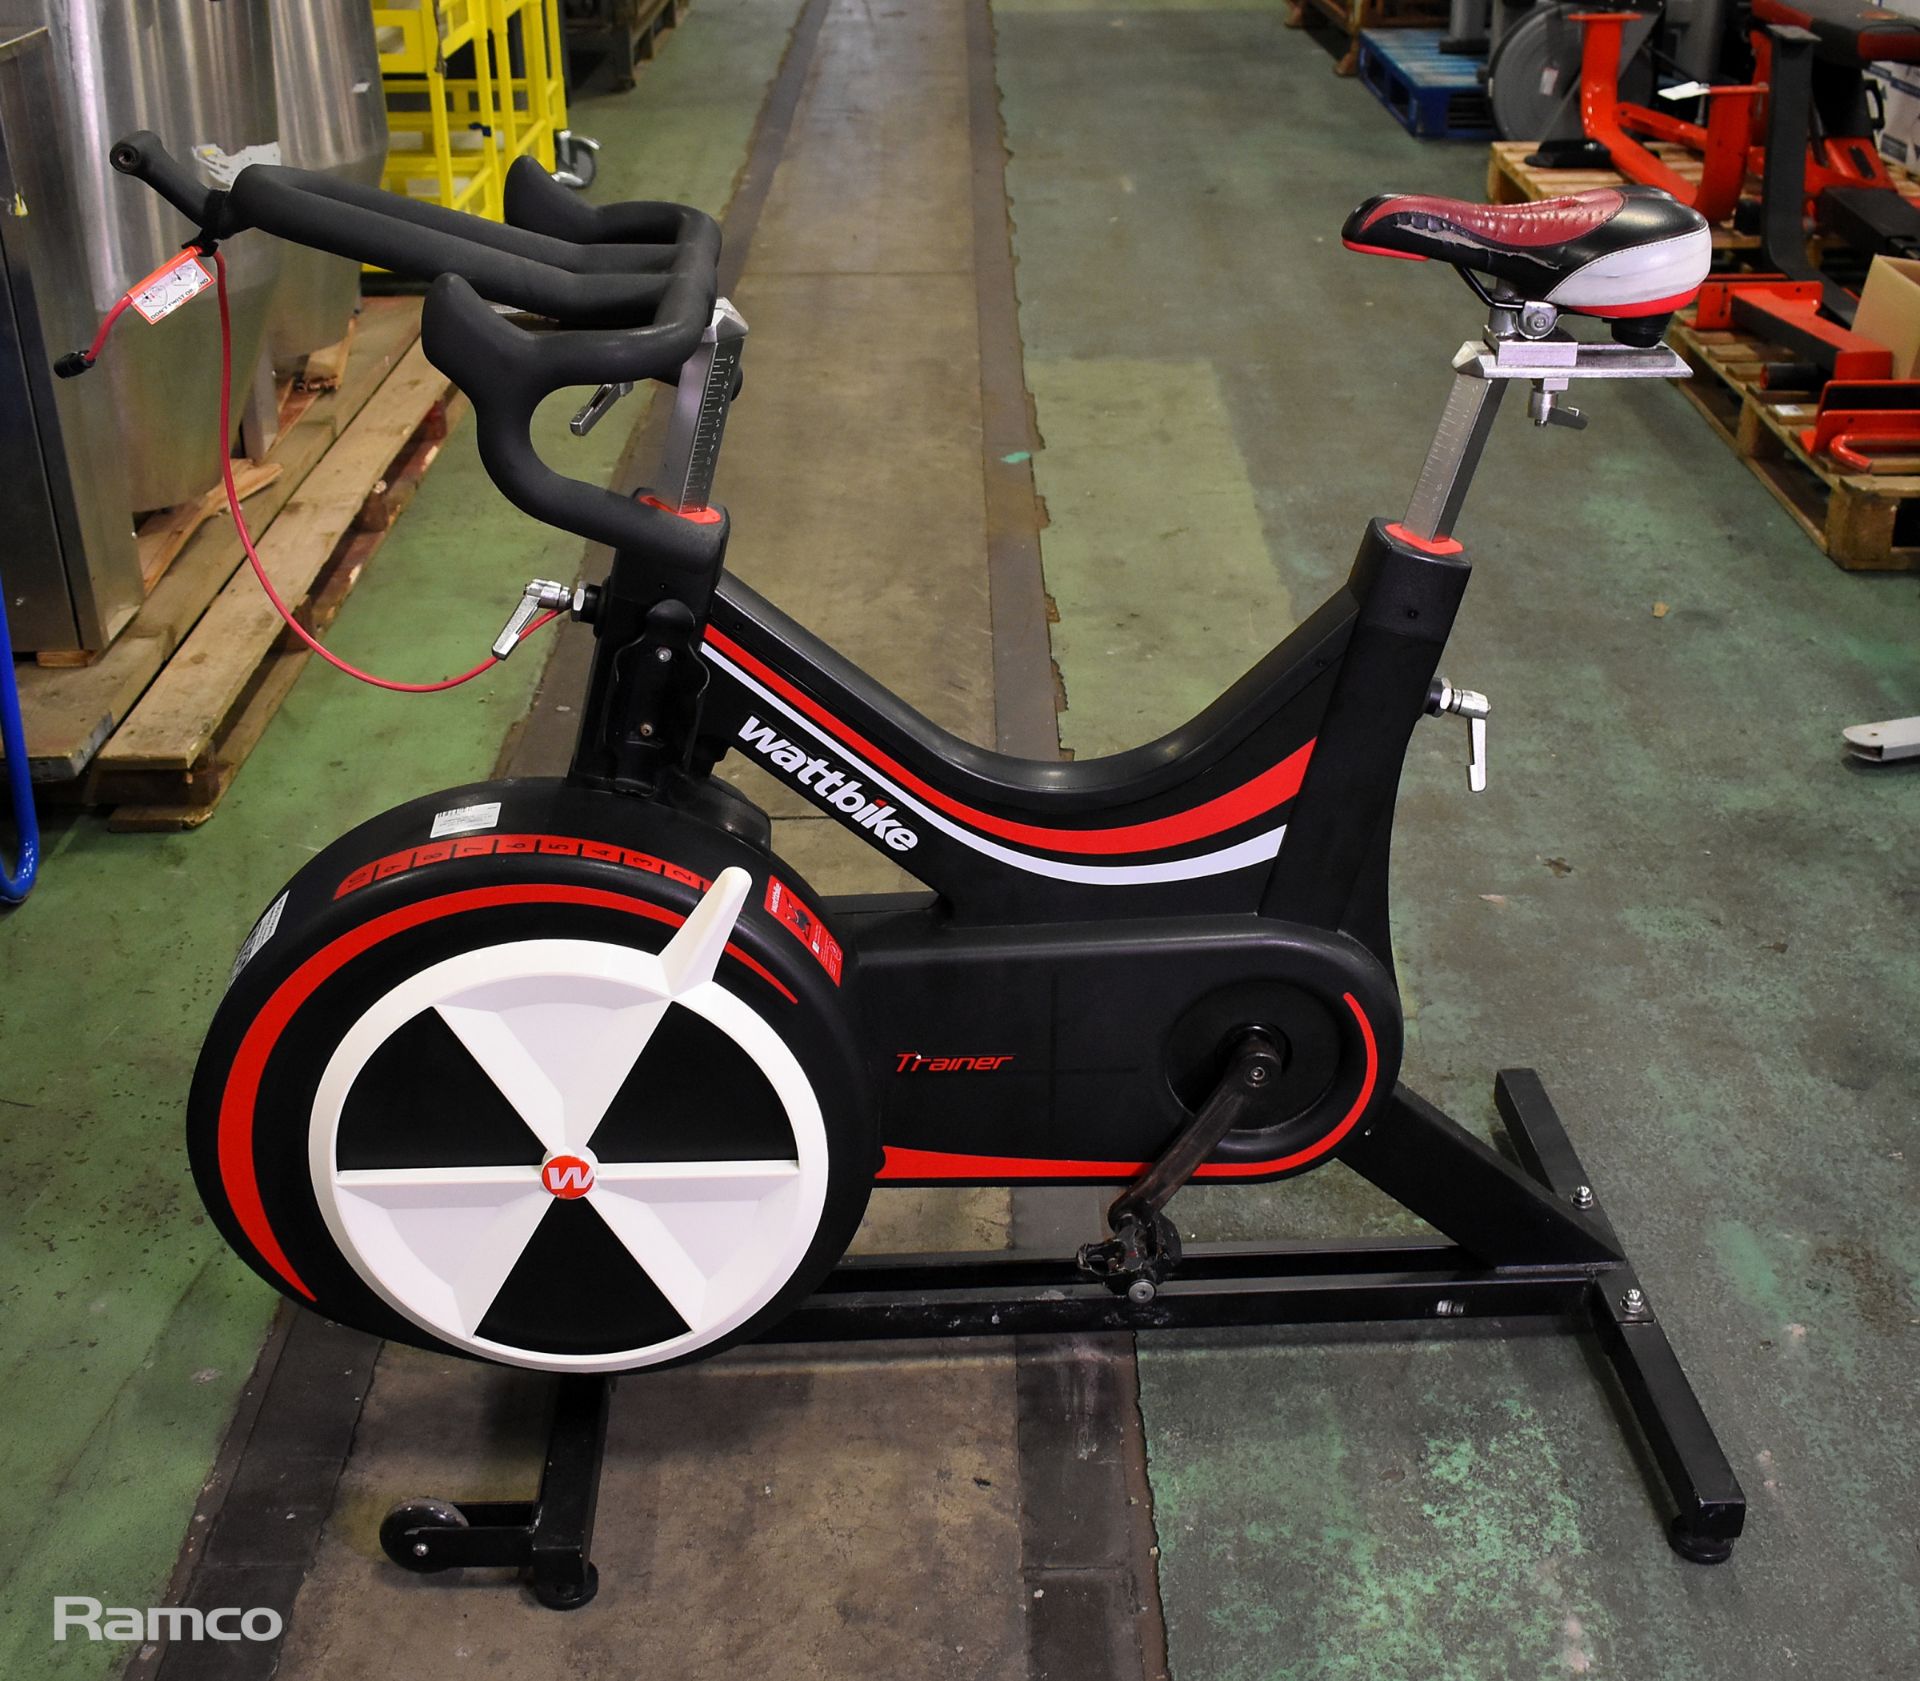 Wattbike Trainer indoor exercise bike - L 1250 x W 660 x H 1080mm